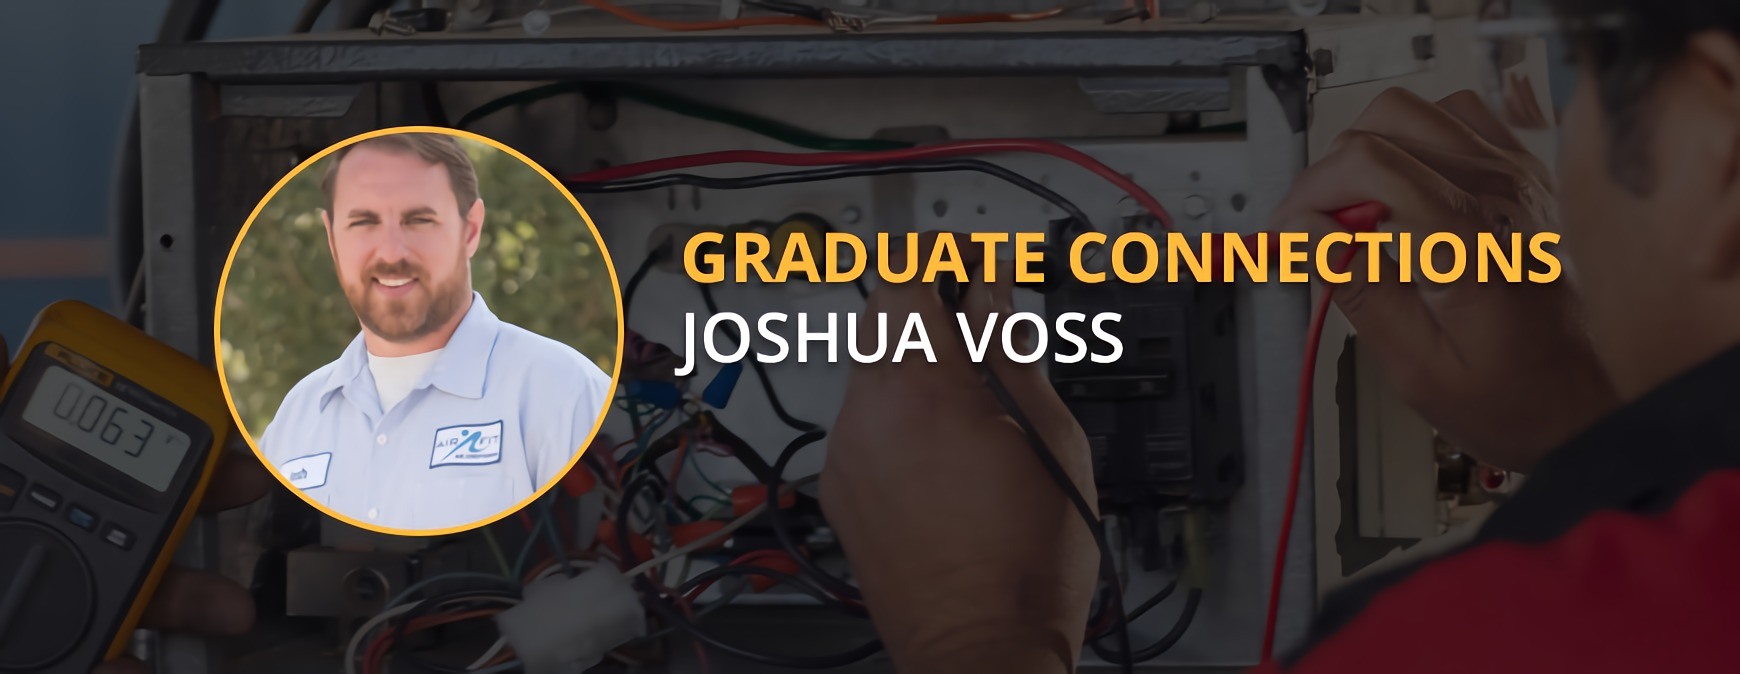 Joshua Voss Graduate Connections